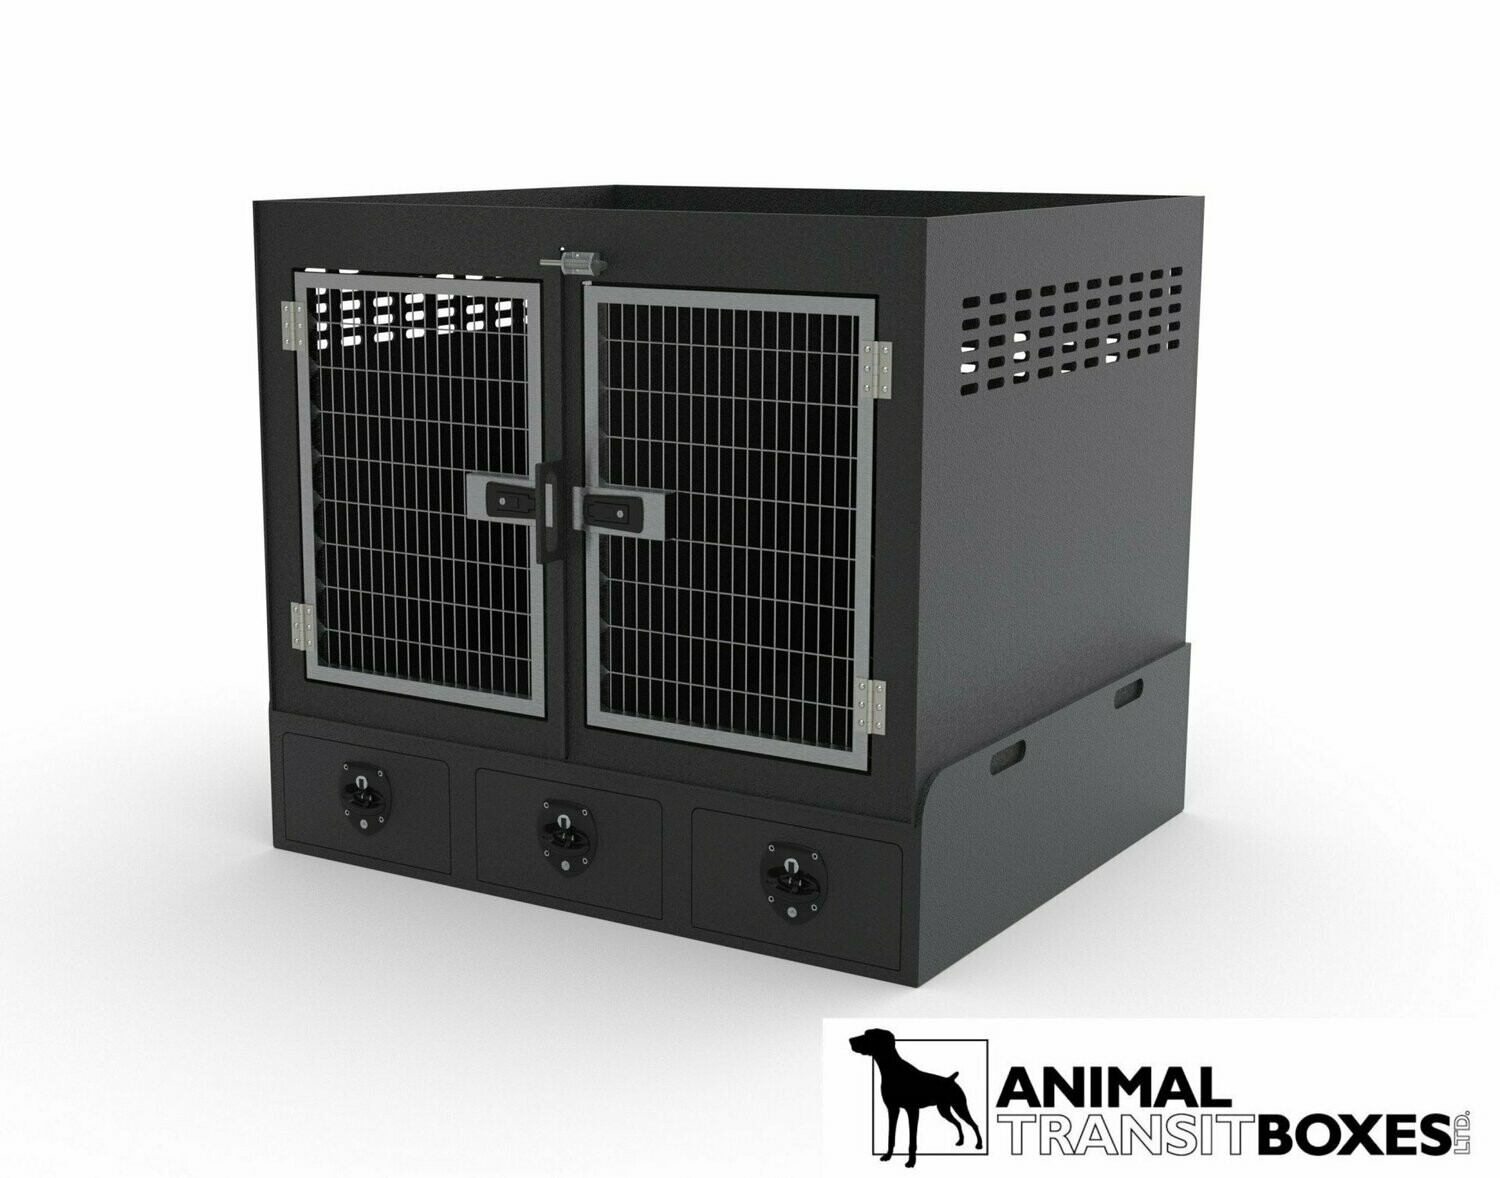 Double Dog Van Transit Box with Storage Drawers